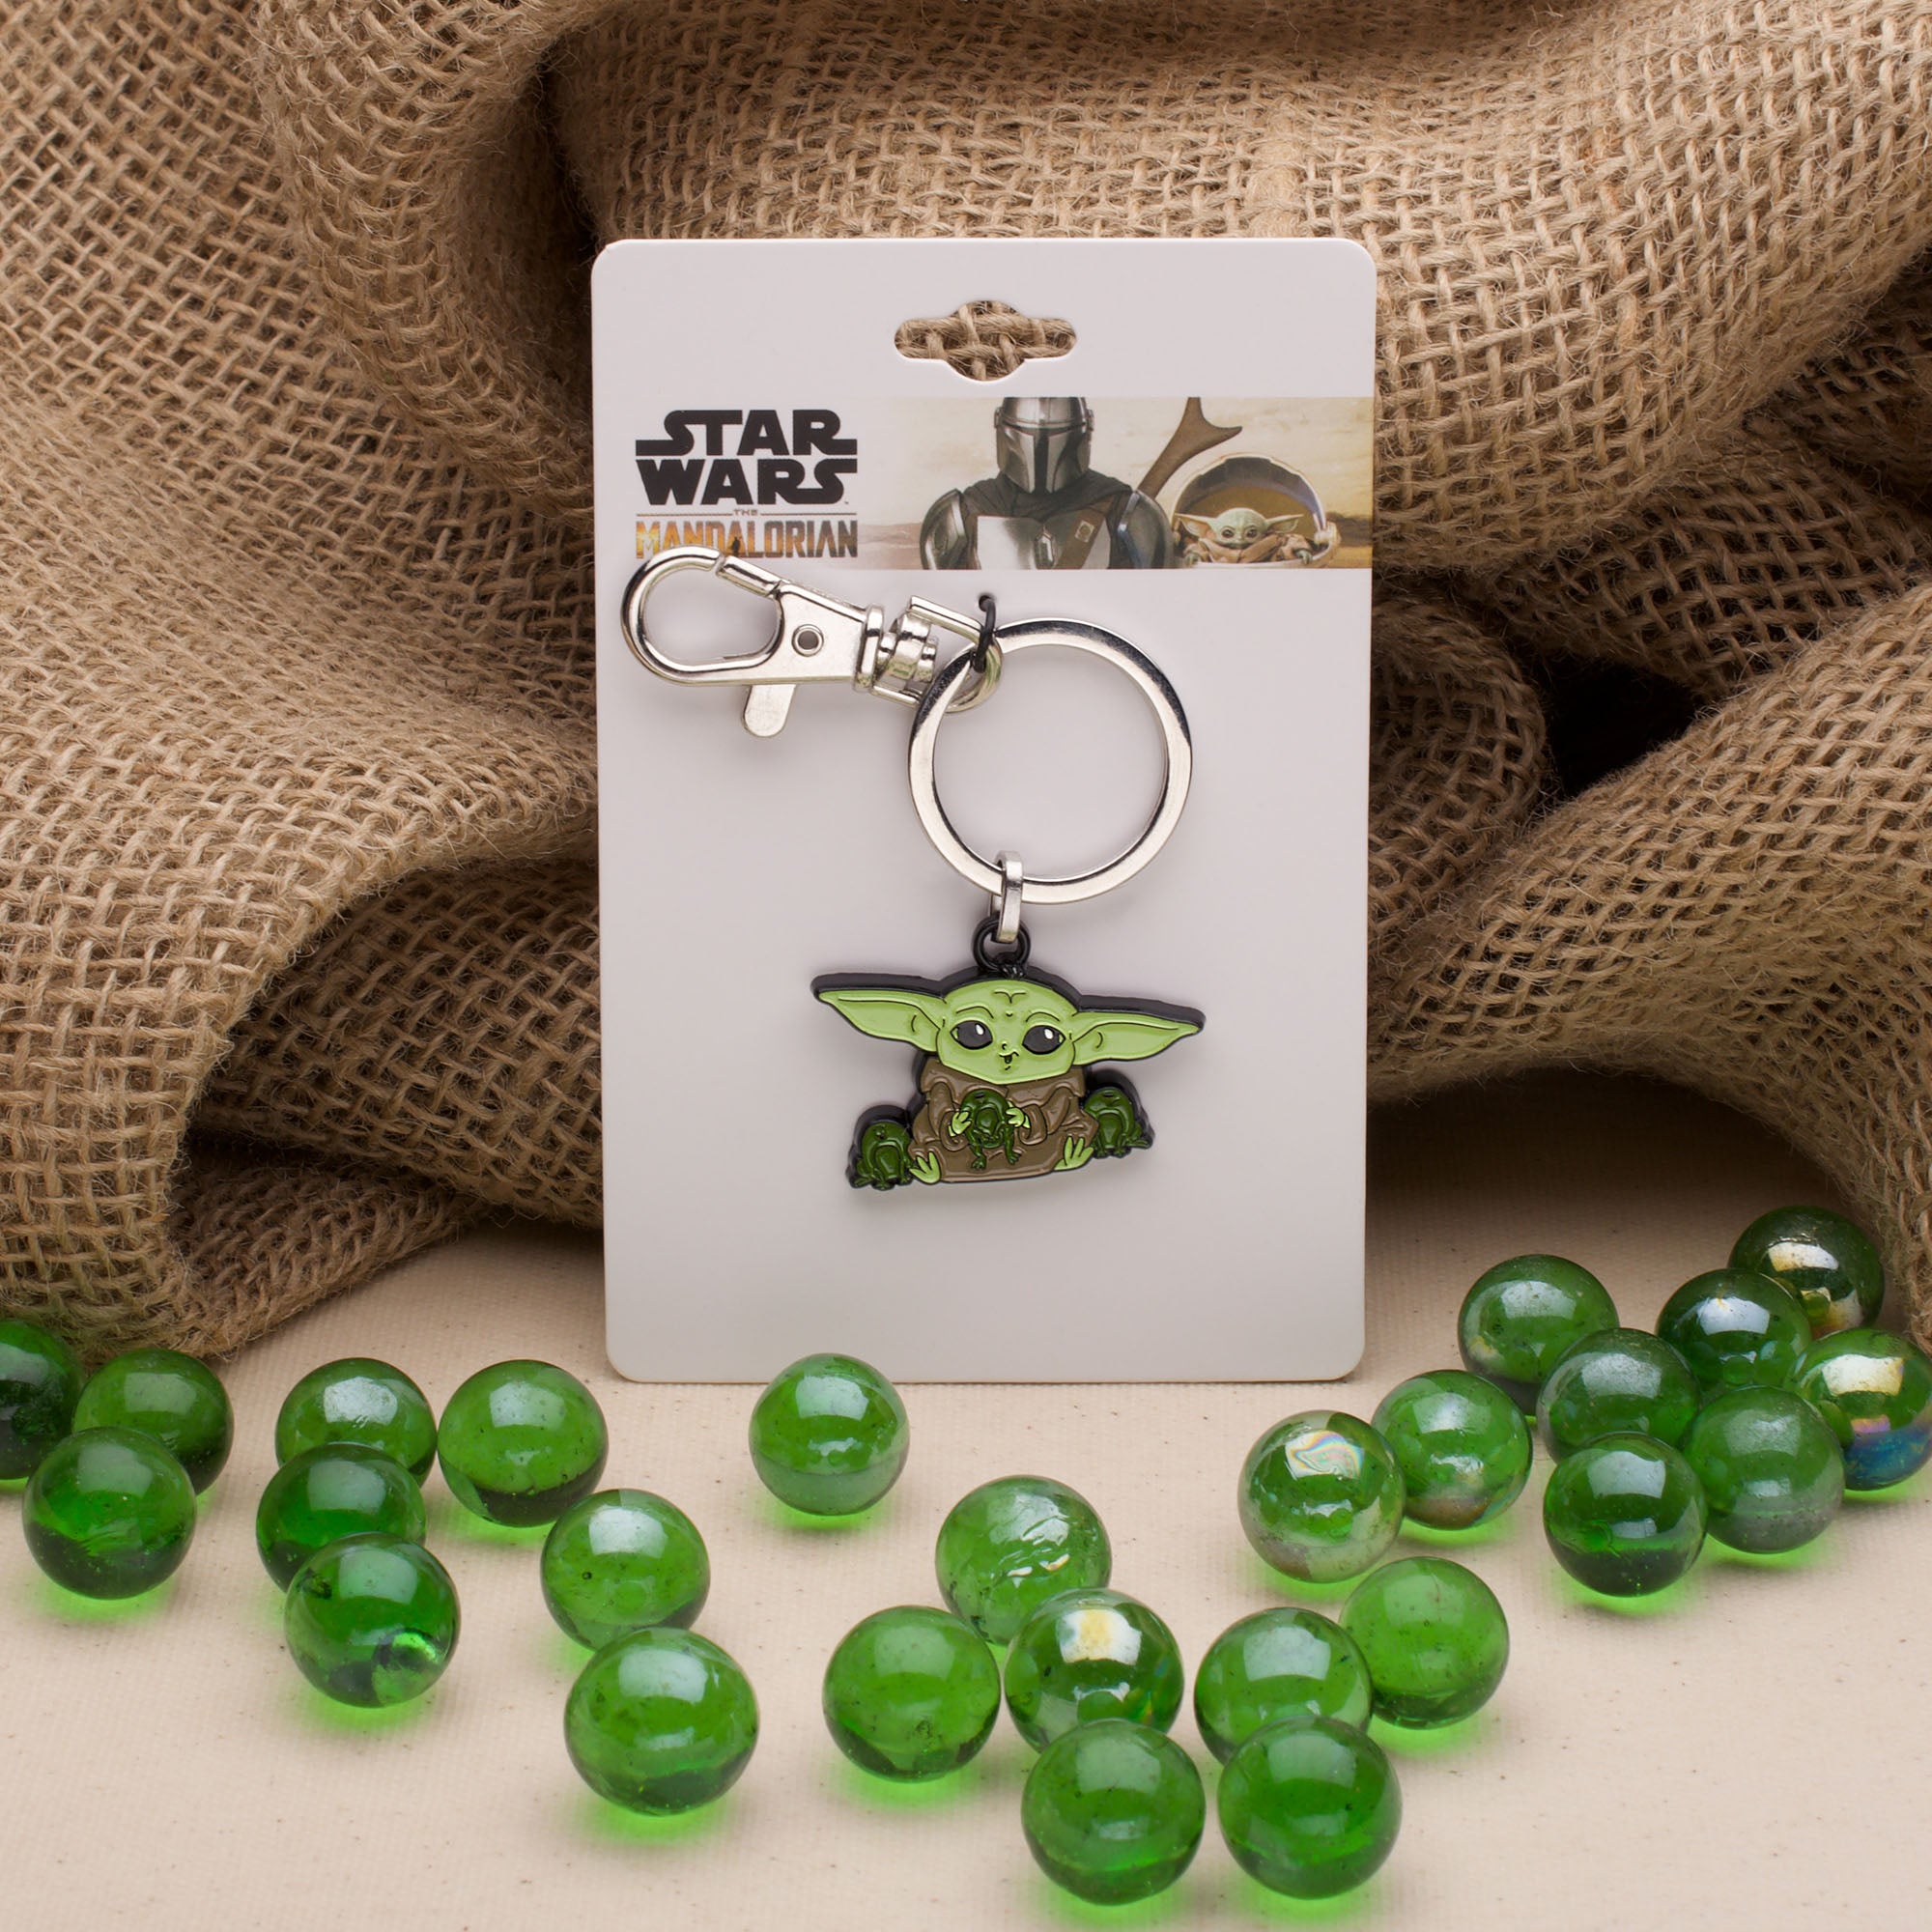 Star Wars: The Mandalorian Grogu (AKA: Baby Yoda/ The Child) with frogs Keychain